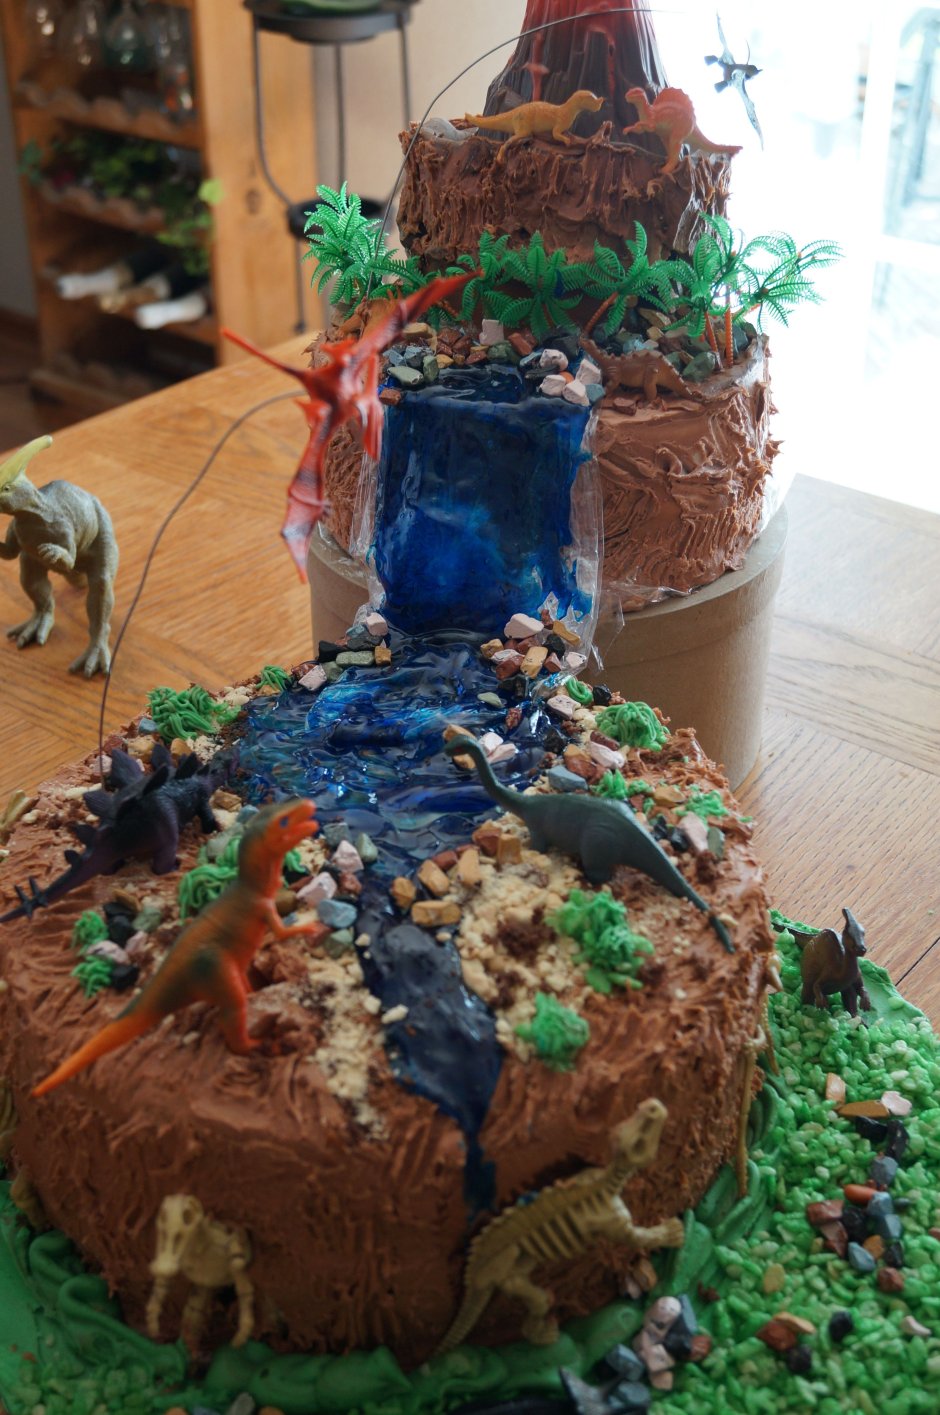 Торт с динозаврами